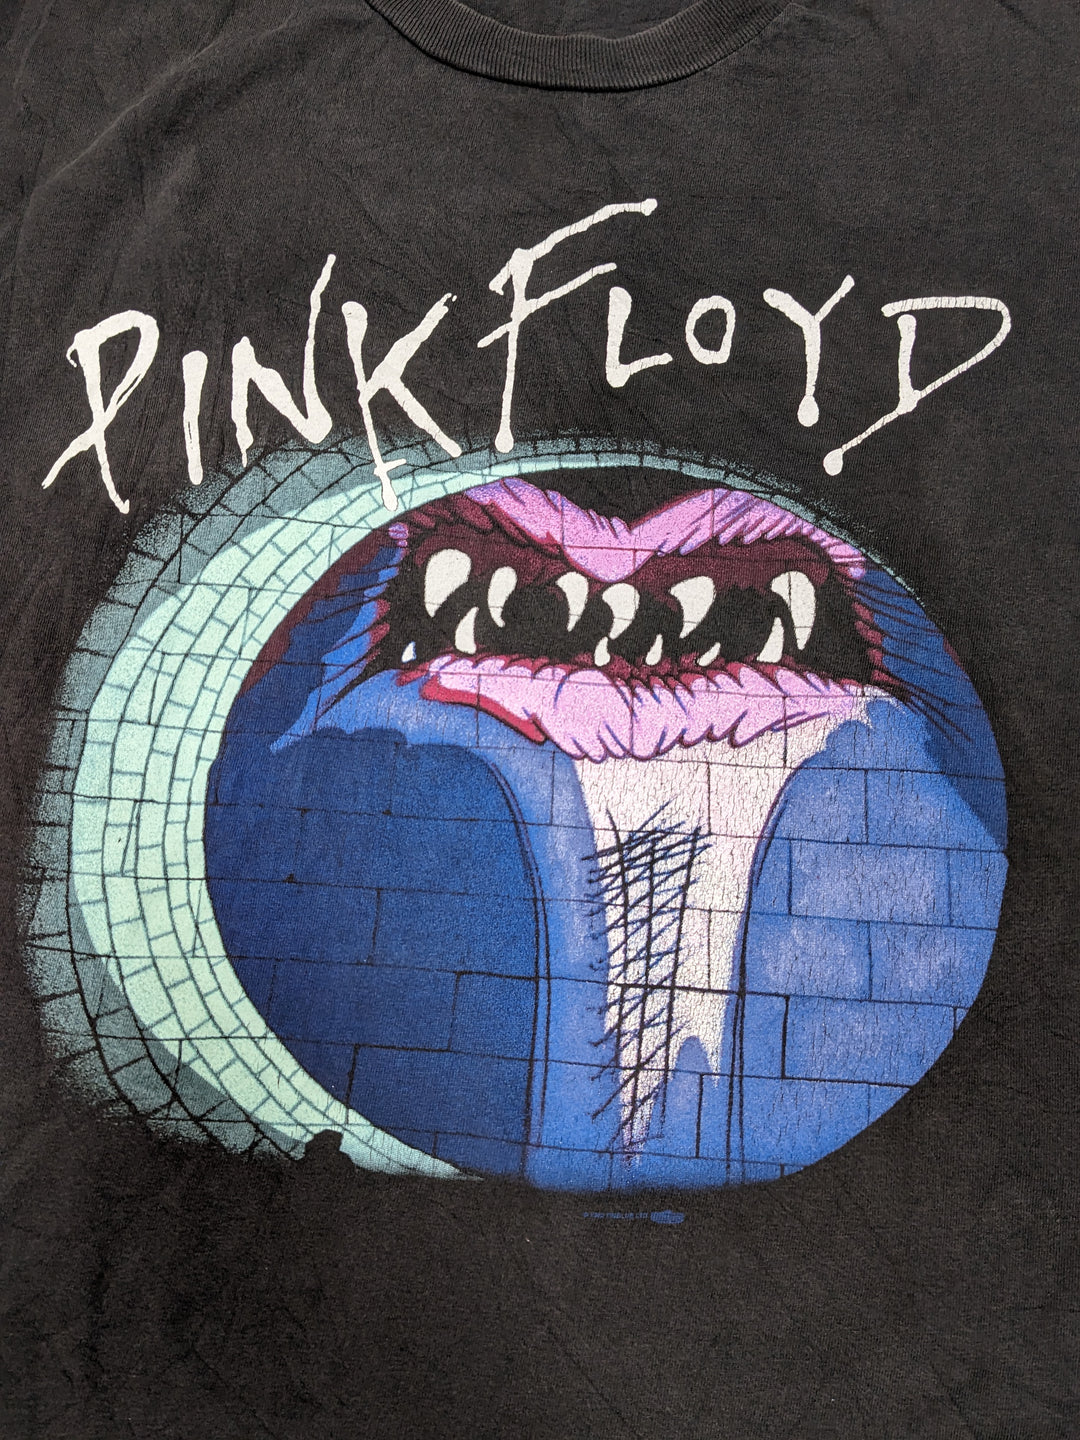 xPink Floyd T-Shirt 1 pc 8 oz D0109707 - Raghouse